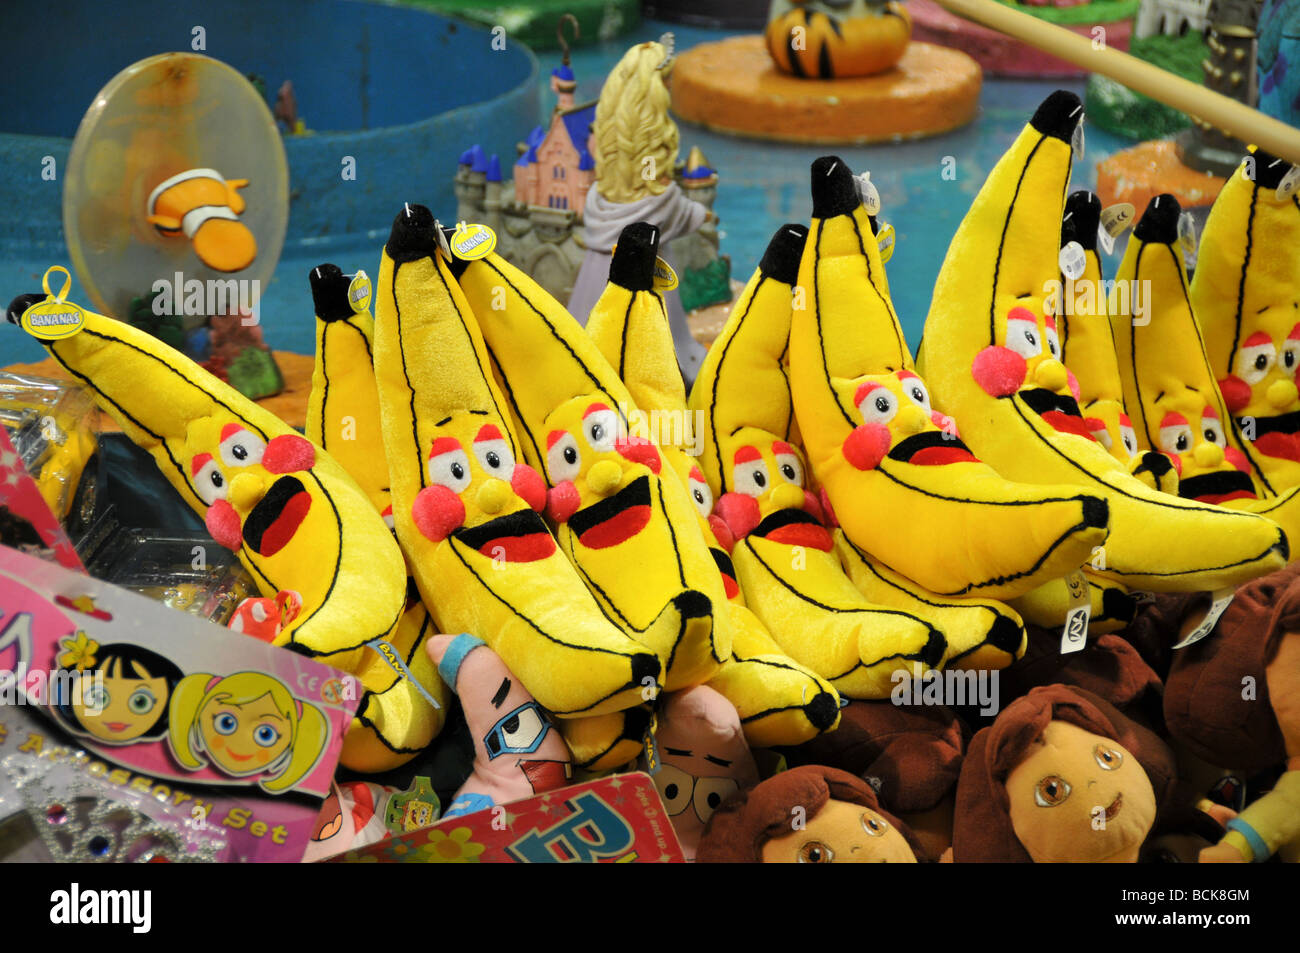 Banana shaped Soft toys in England, UK Stock Photo